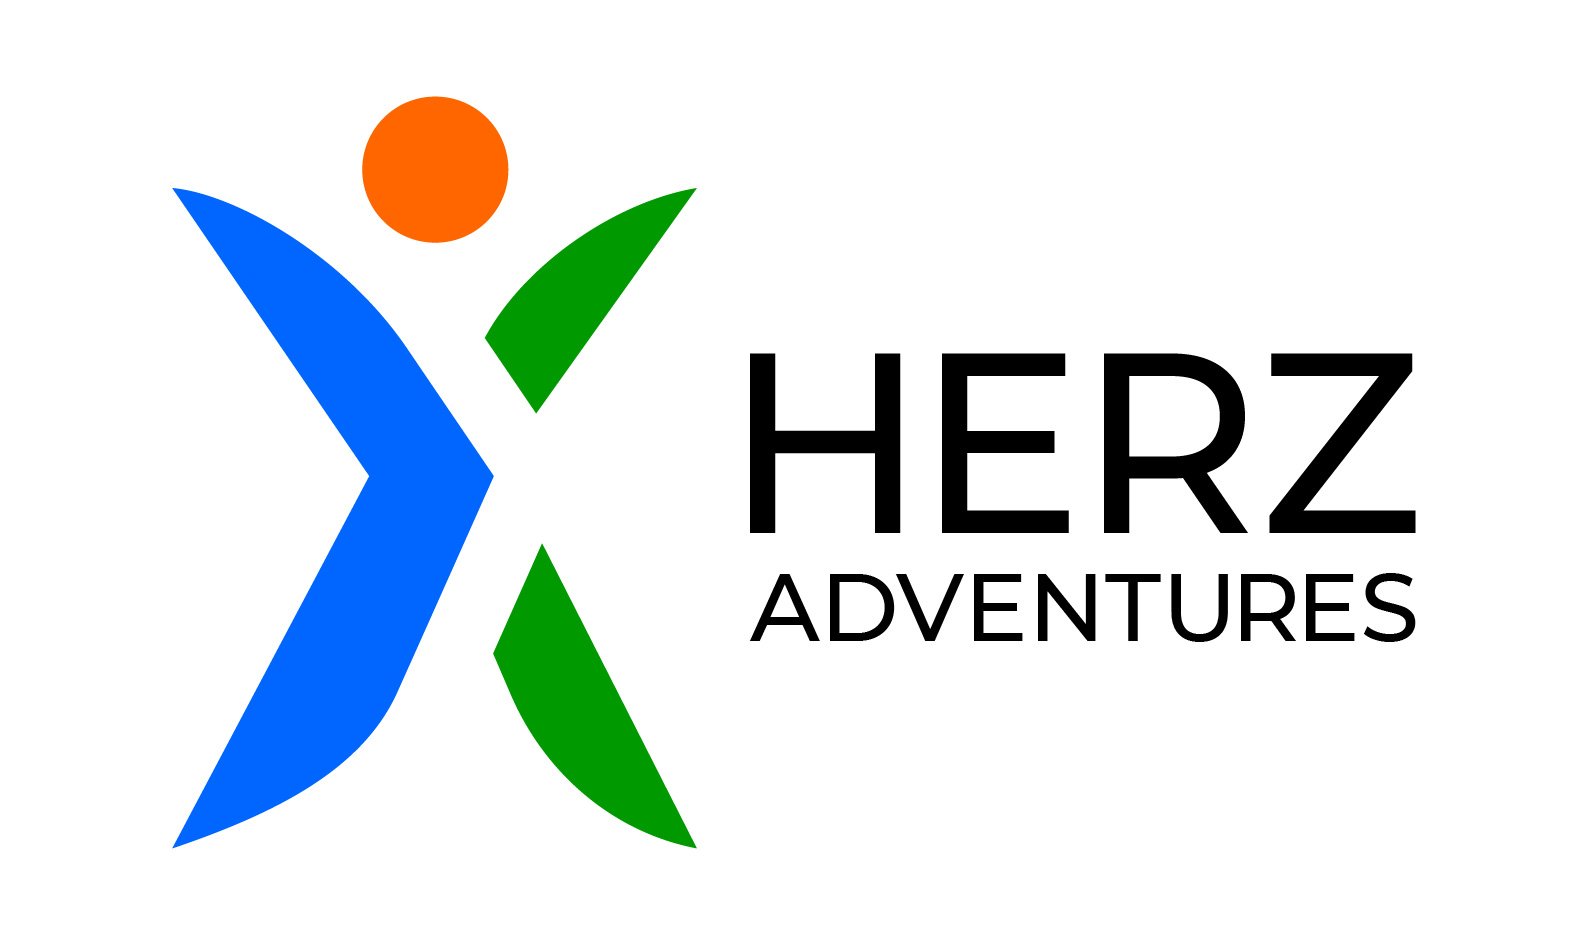 HERZ Adventures logo.jpg